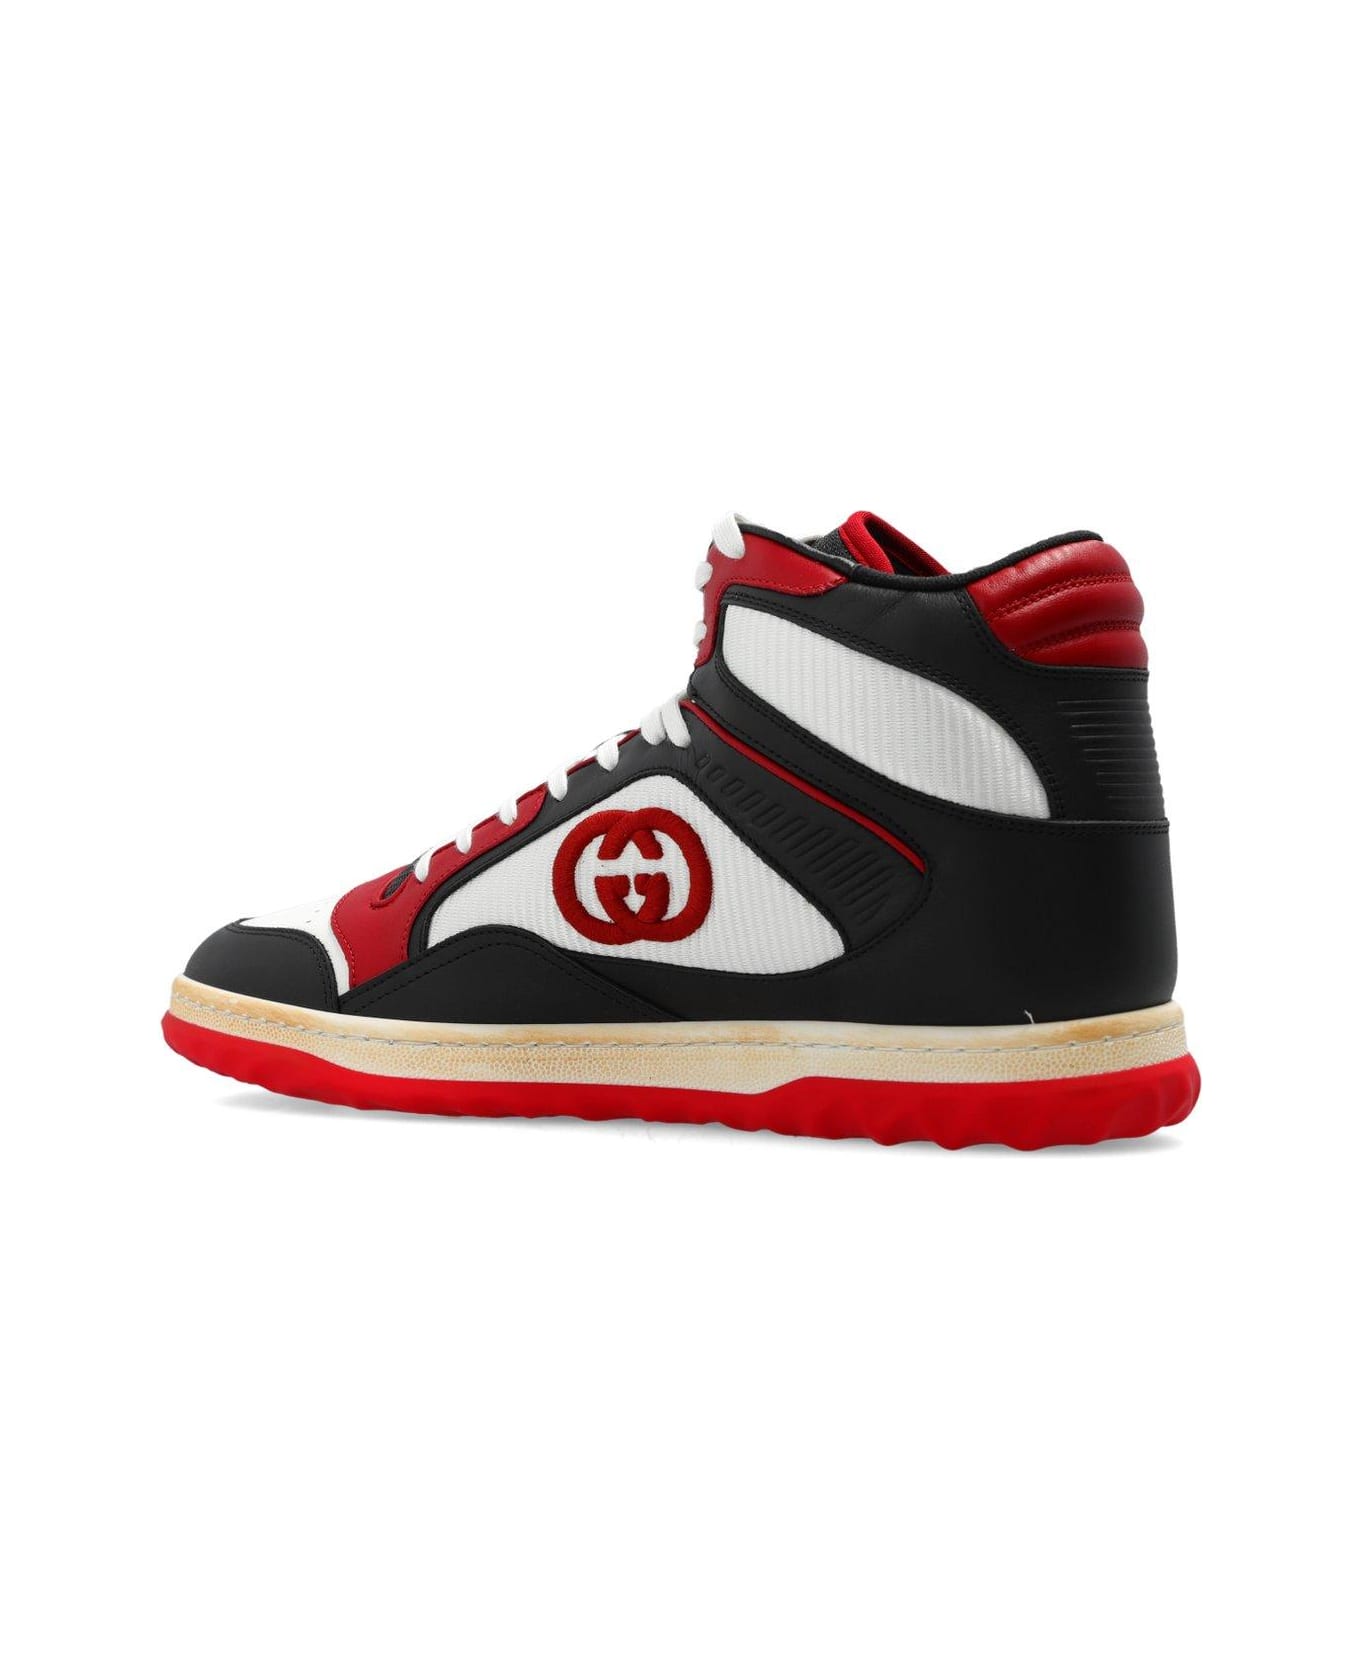 Gucci Panelled High-top Sneakers - BLAOFWHHREDBLA スニーカー